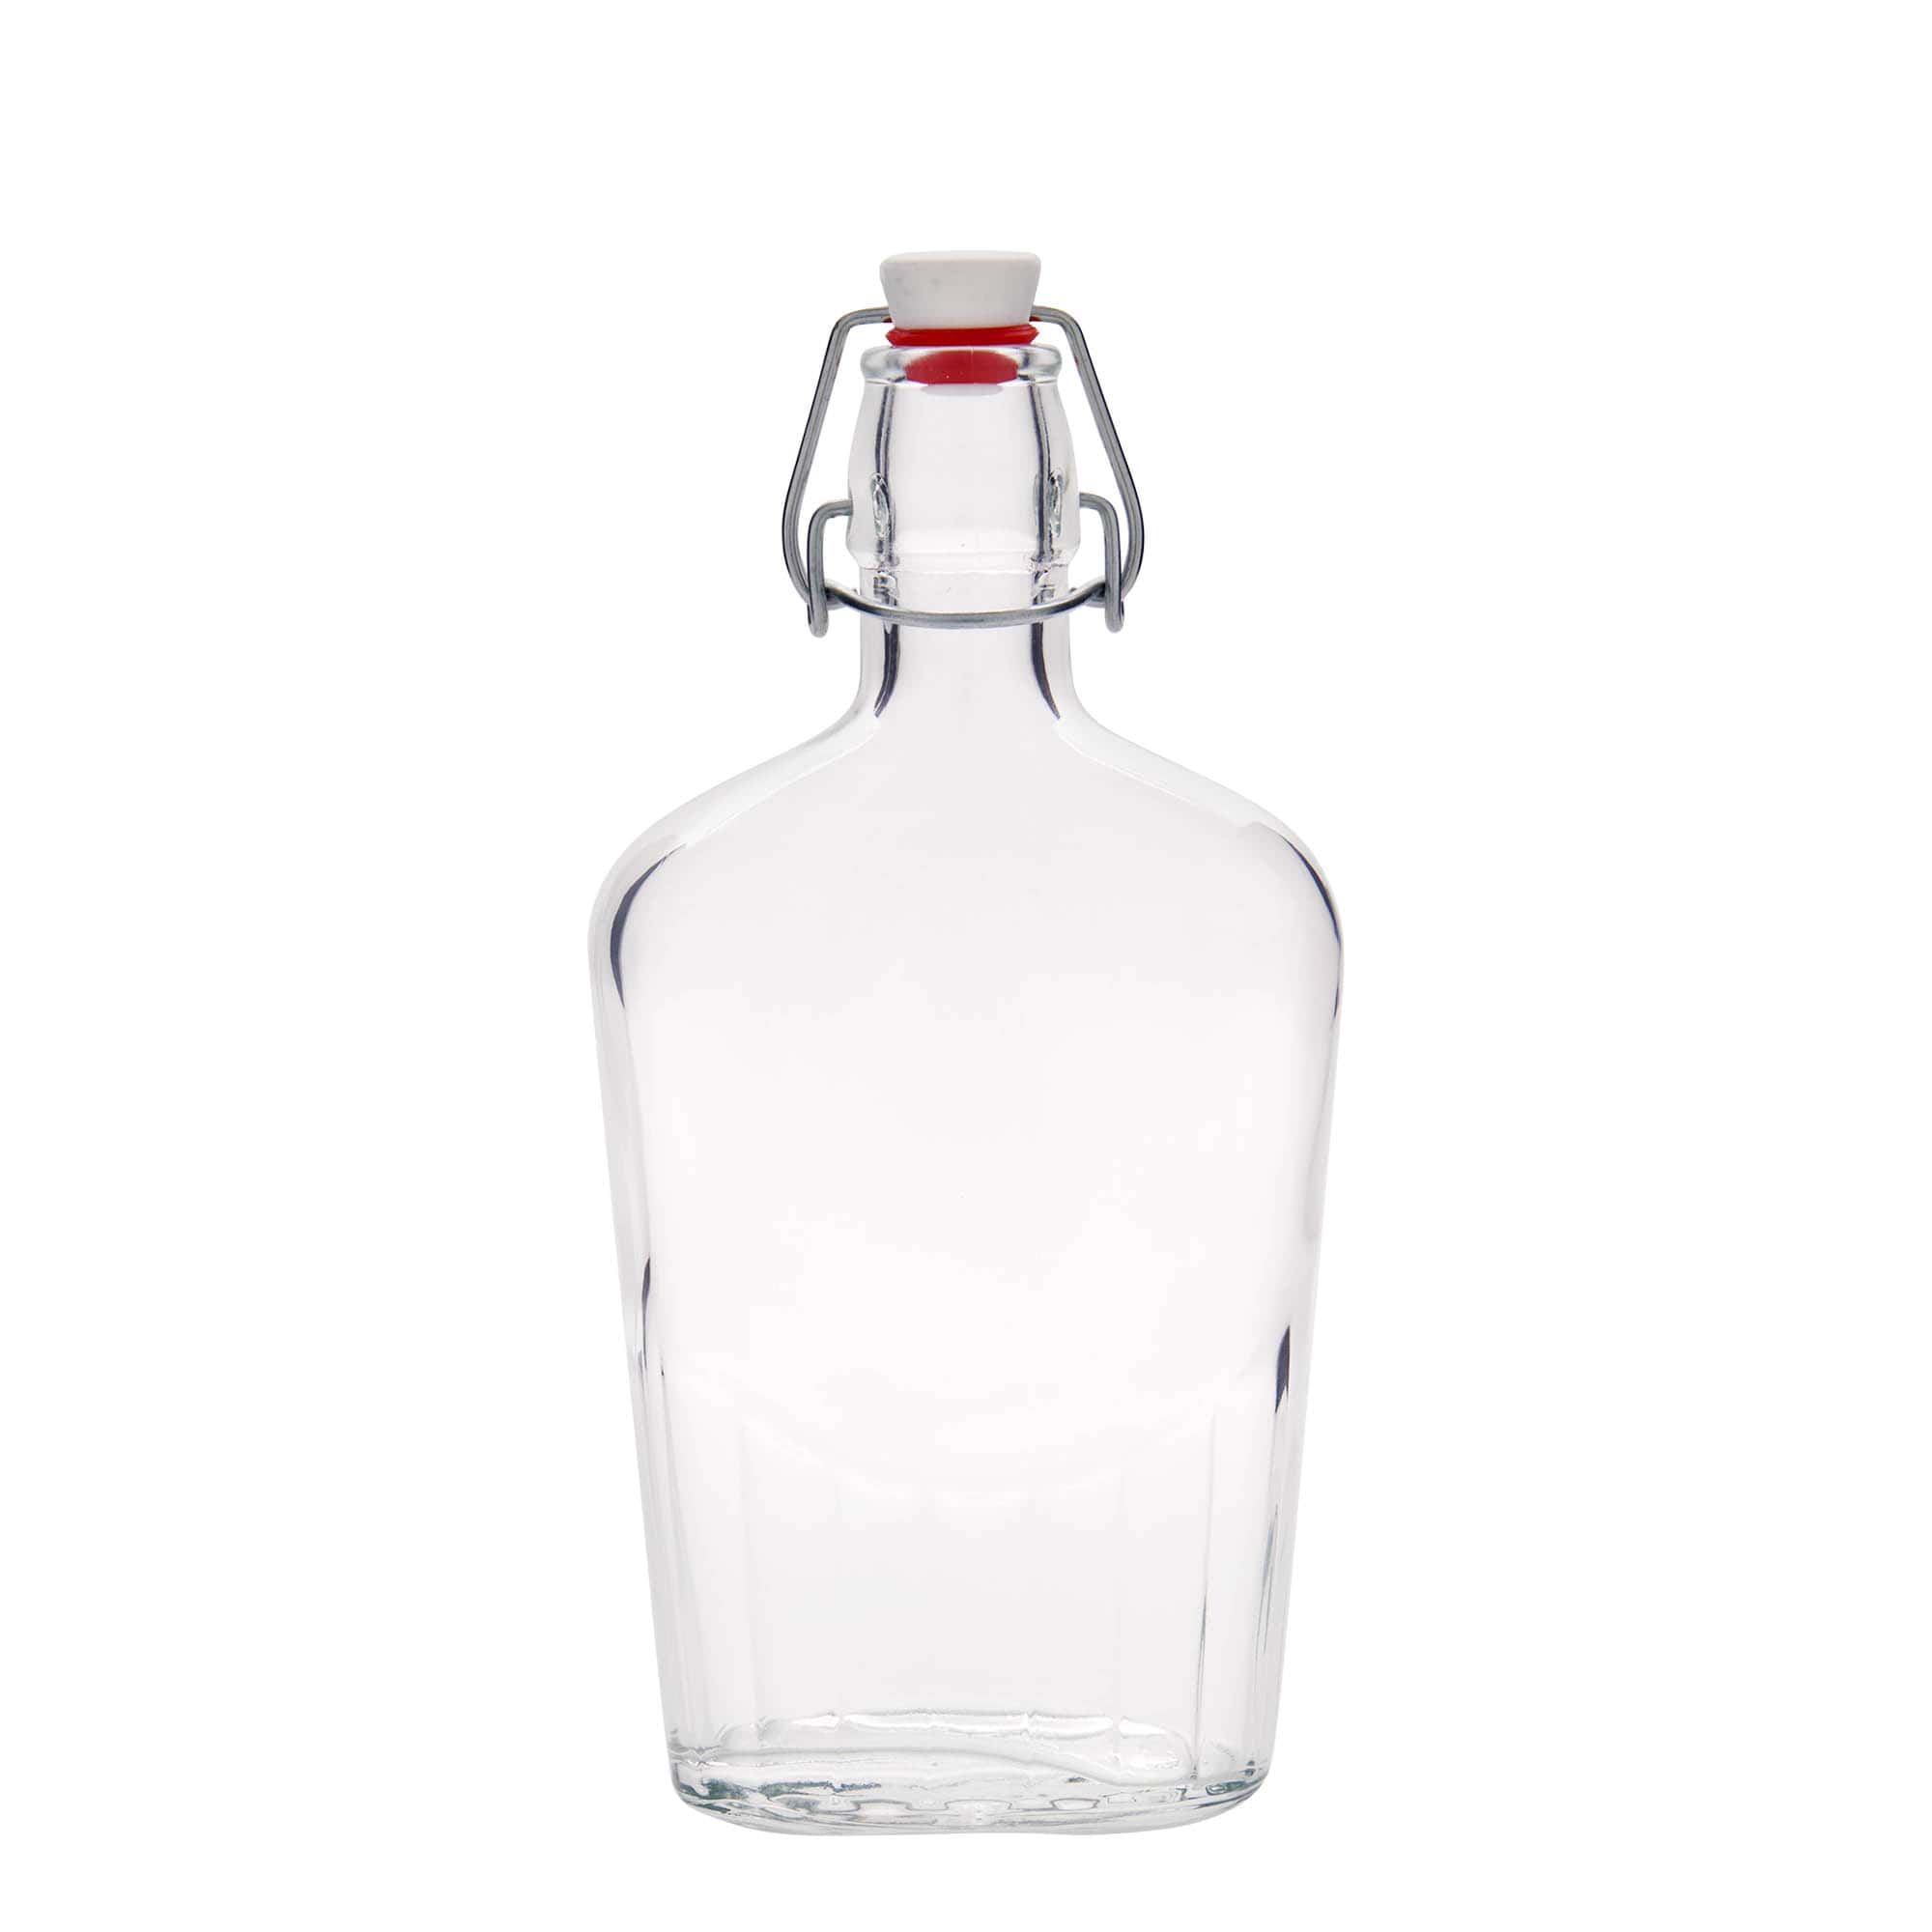 500 ml glasflaske 'Fiaschetta', oval, åbning: Patentlåg